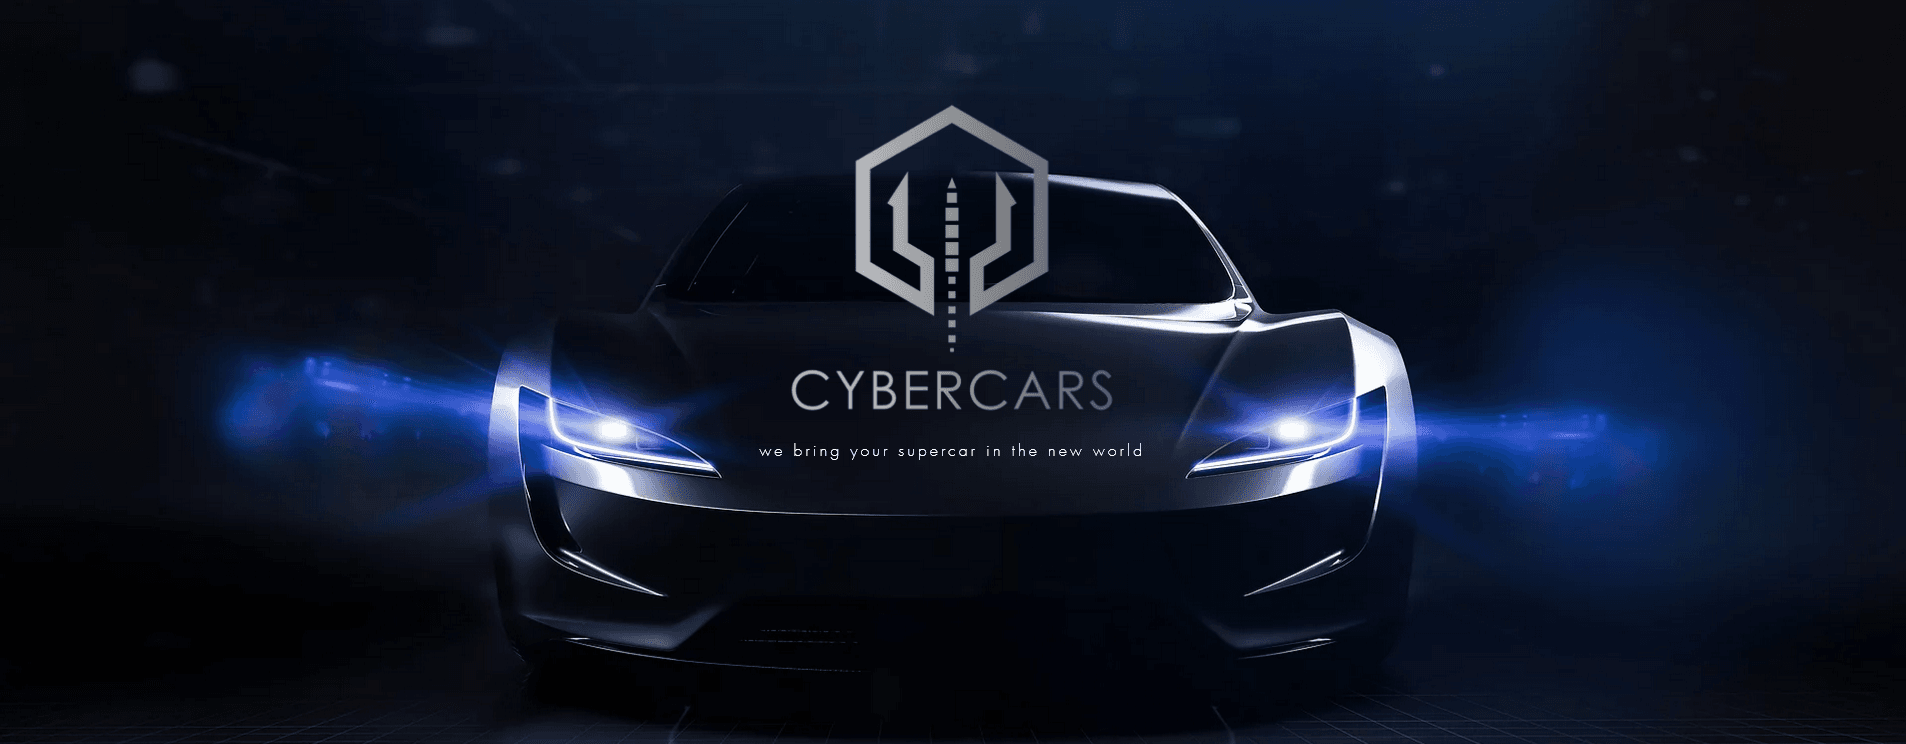 CyberCar bannière